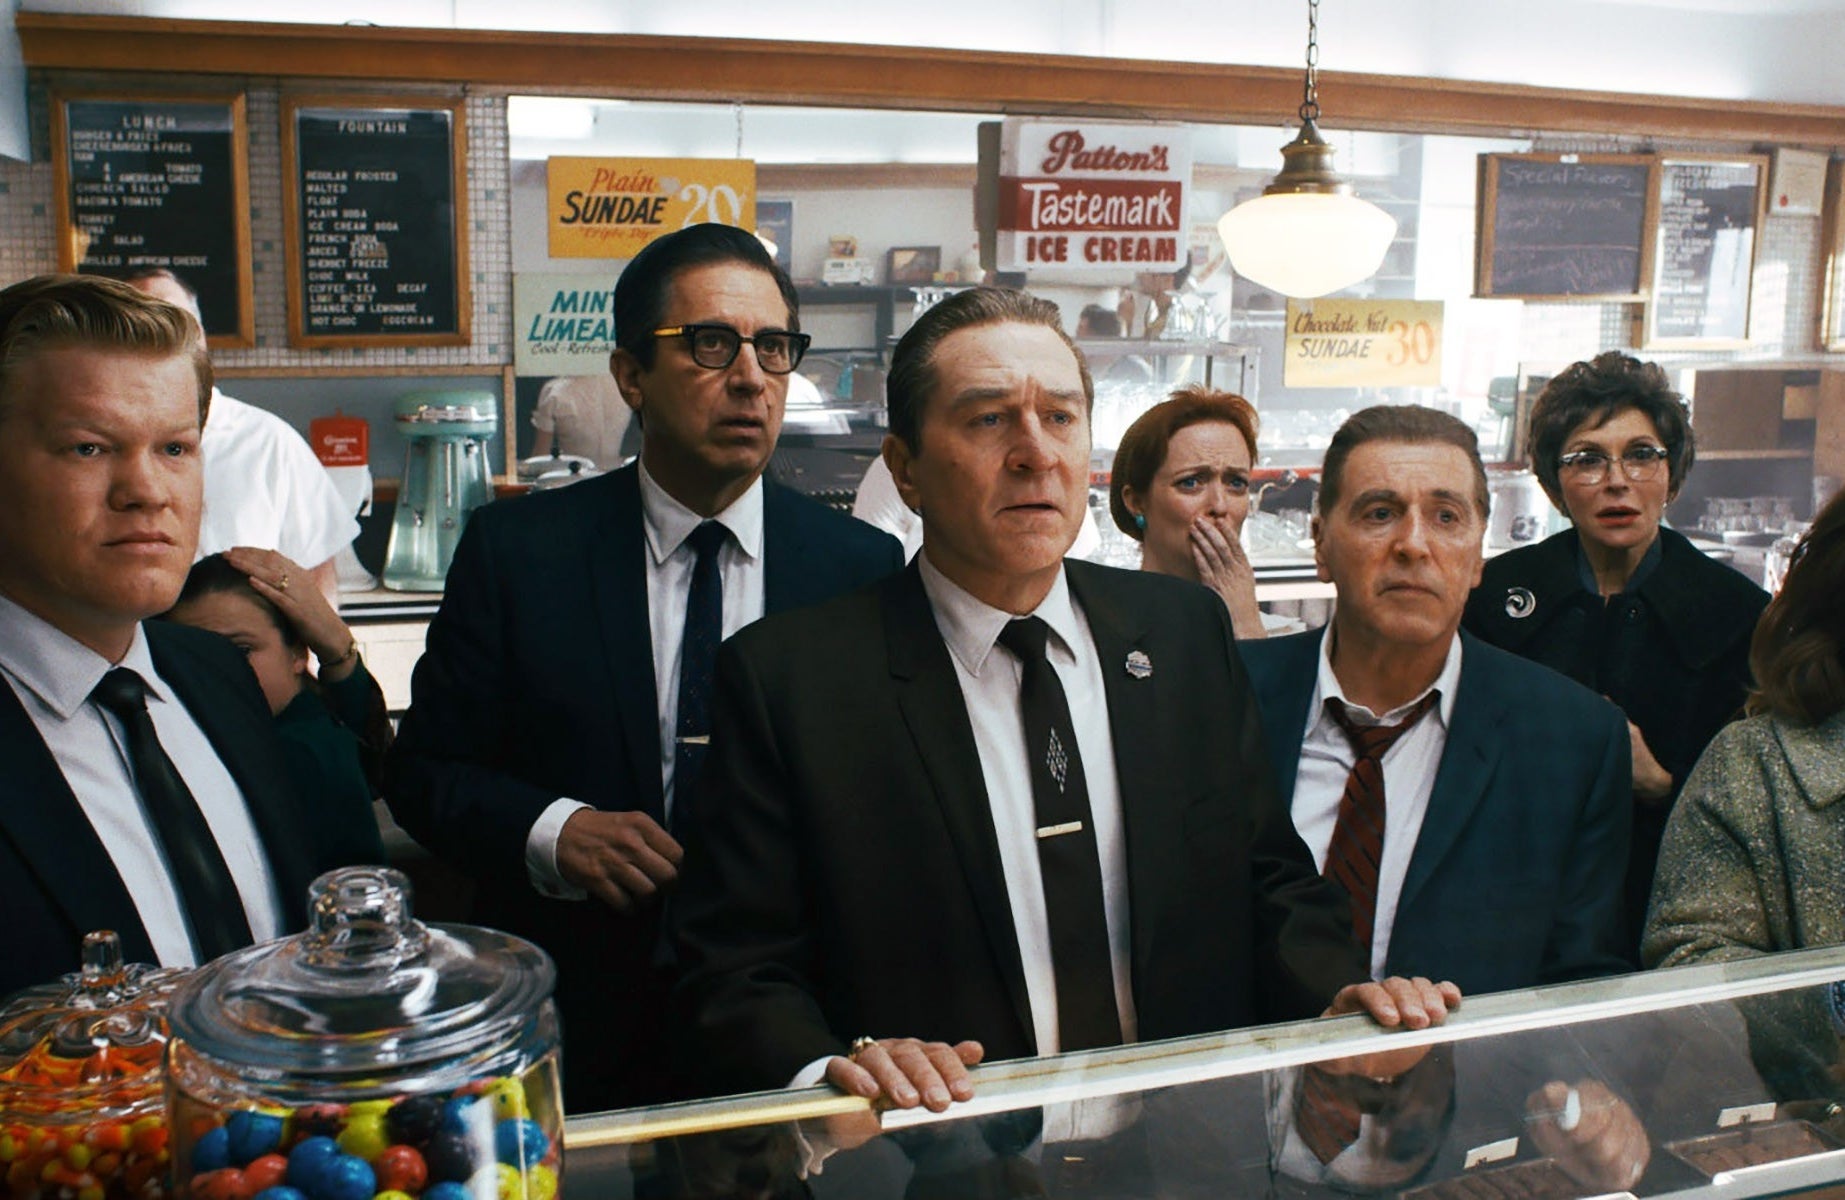 Jesse Plemons, Ray Romano, Robert De Niro, and Al Pacino look concerned